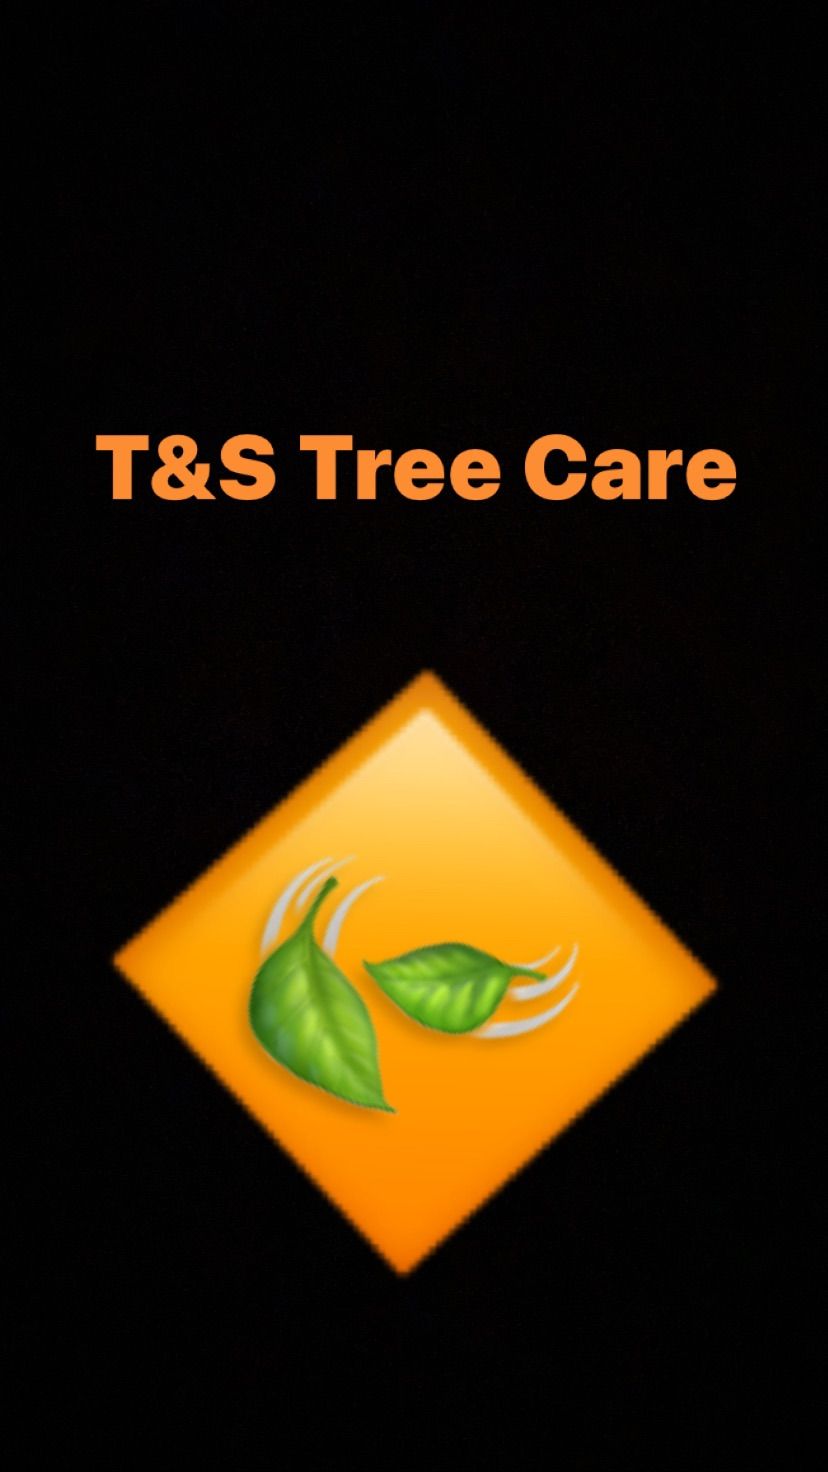 T&S TREE CARE